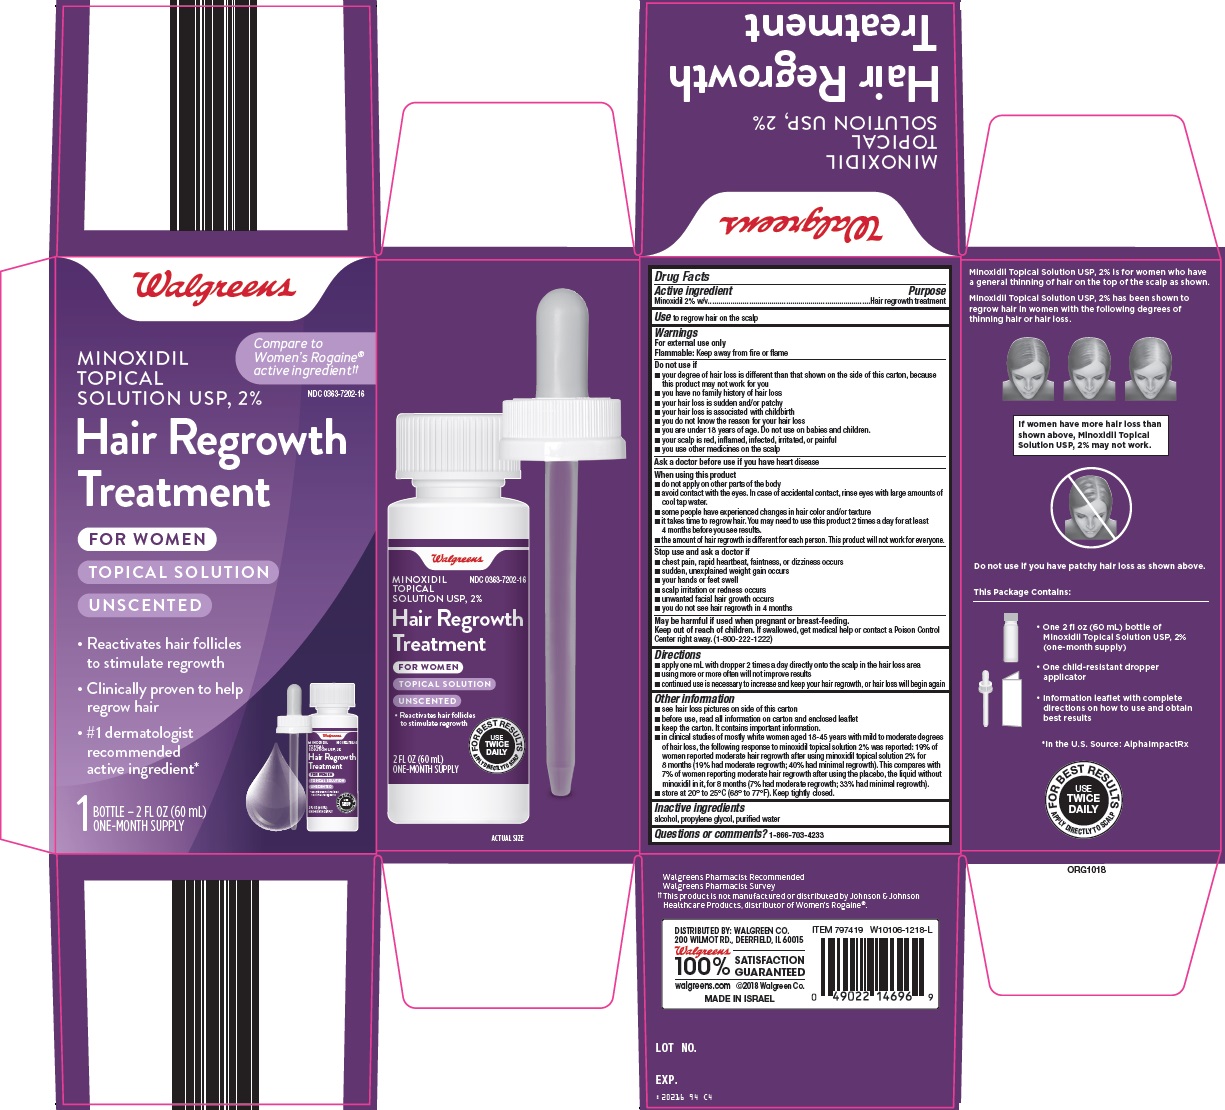 hair-regrowth-treatment-image